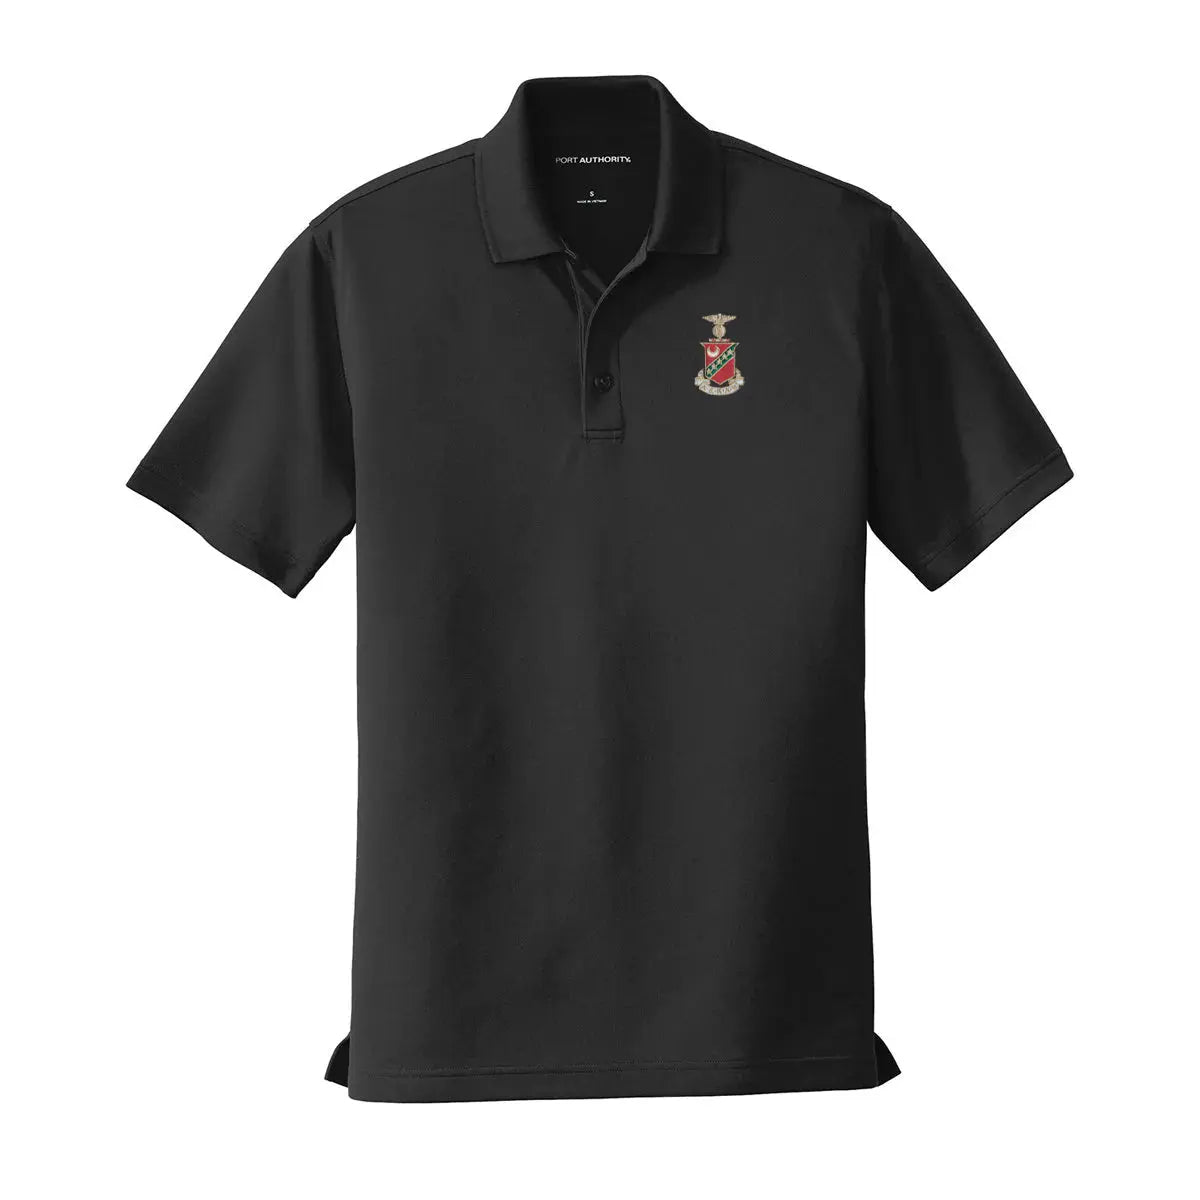 Kappa Sig Crest Black Performance Polo - Kappa Sigma Official Store